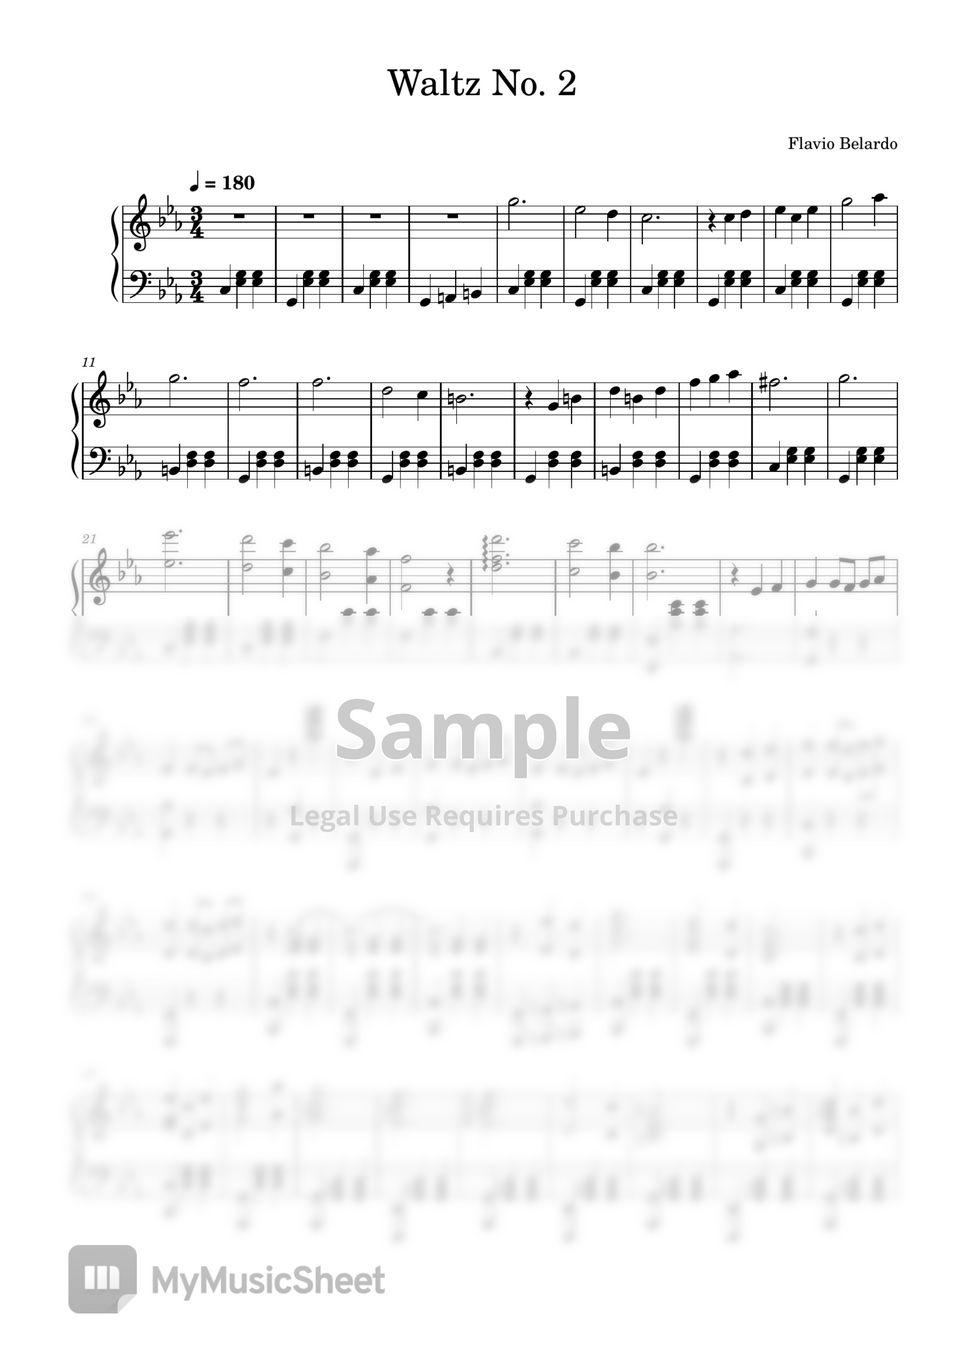 Dmitri Shostakovich - Waltz No. 2 (Flavio Belardo TikTok version) by Flavio Belardo